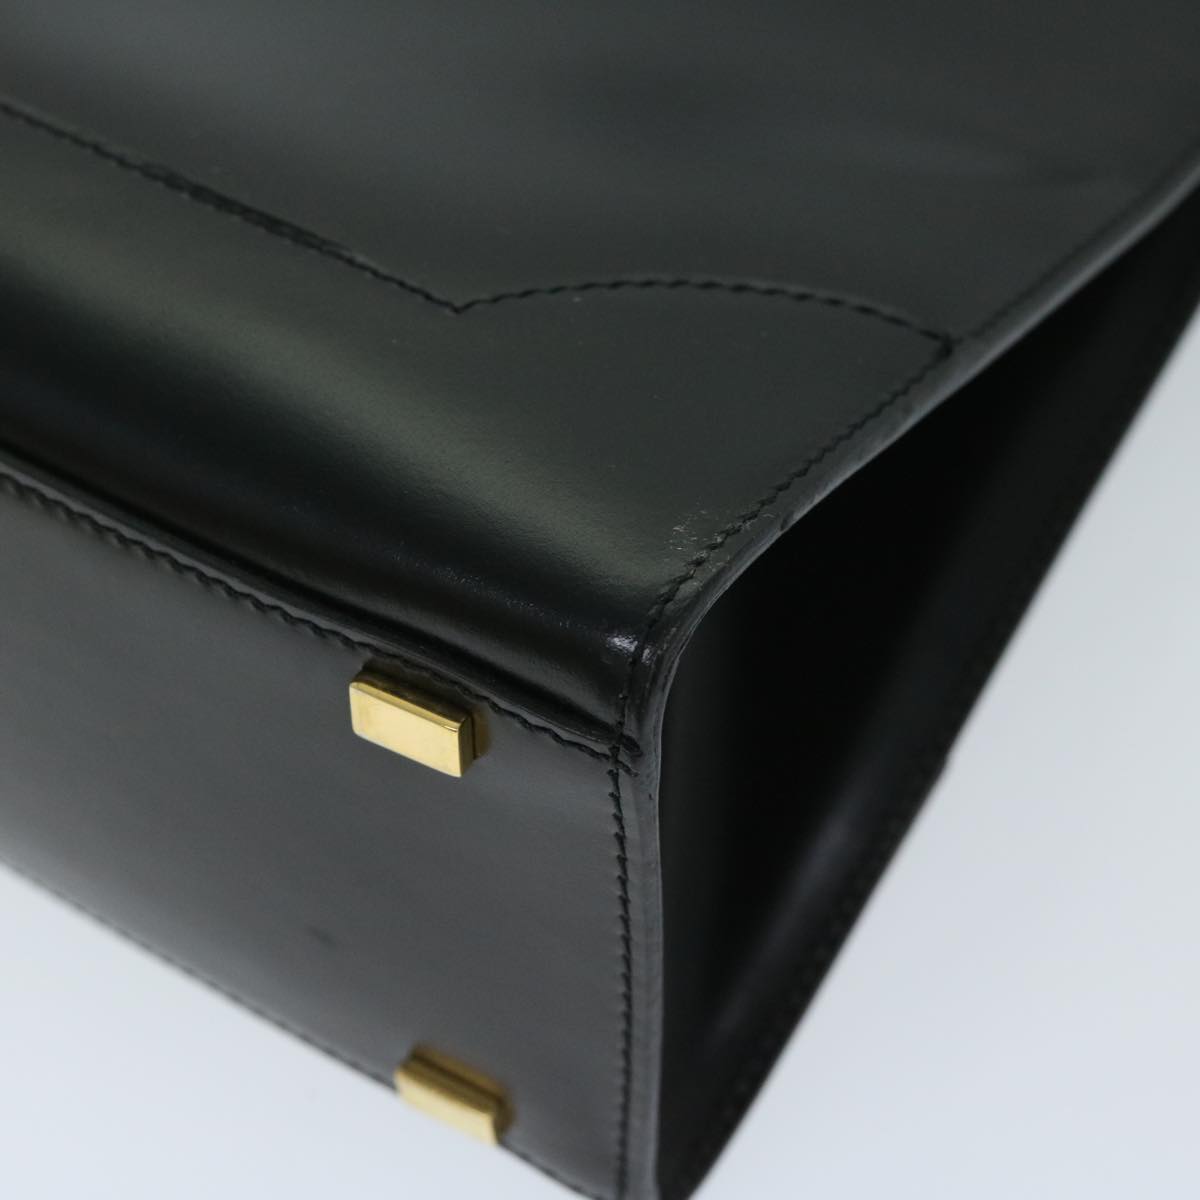 CELINE Hand Bag Leather Black Auth 69373